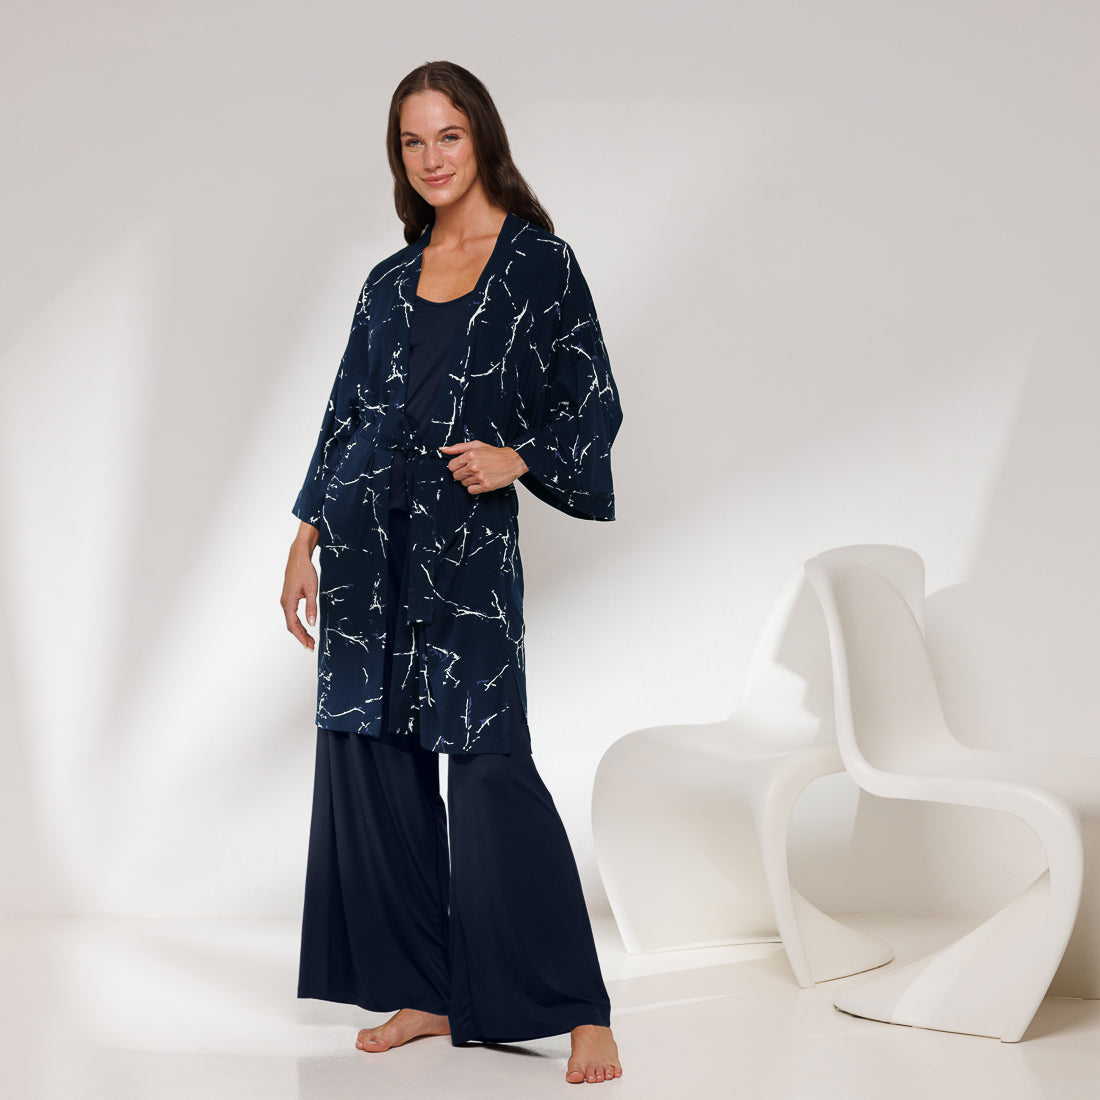 Kimono robe women—RELAXWEAR